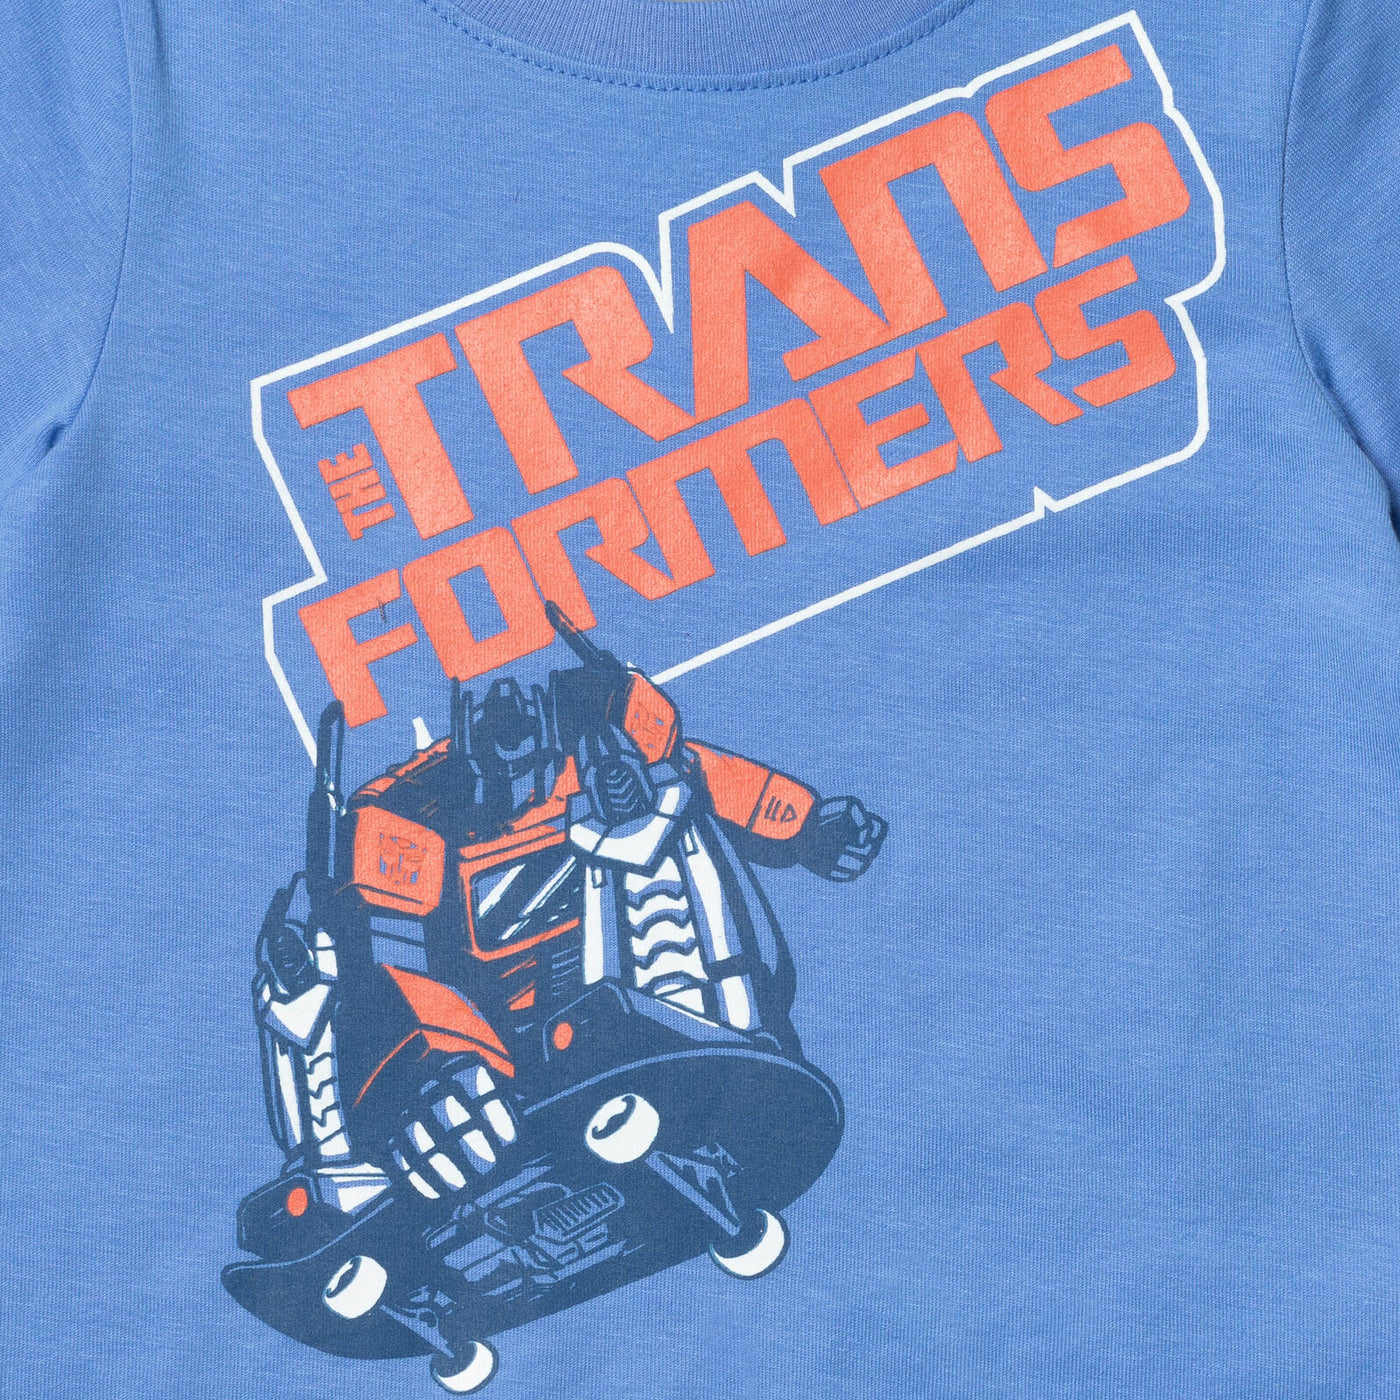 Transformers Optimus Prime 2 Pack T-Shirts